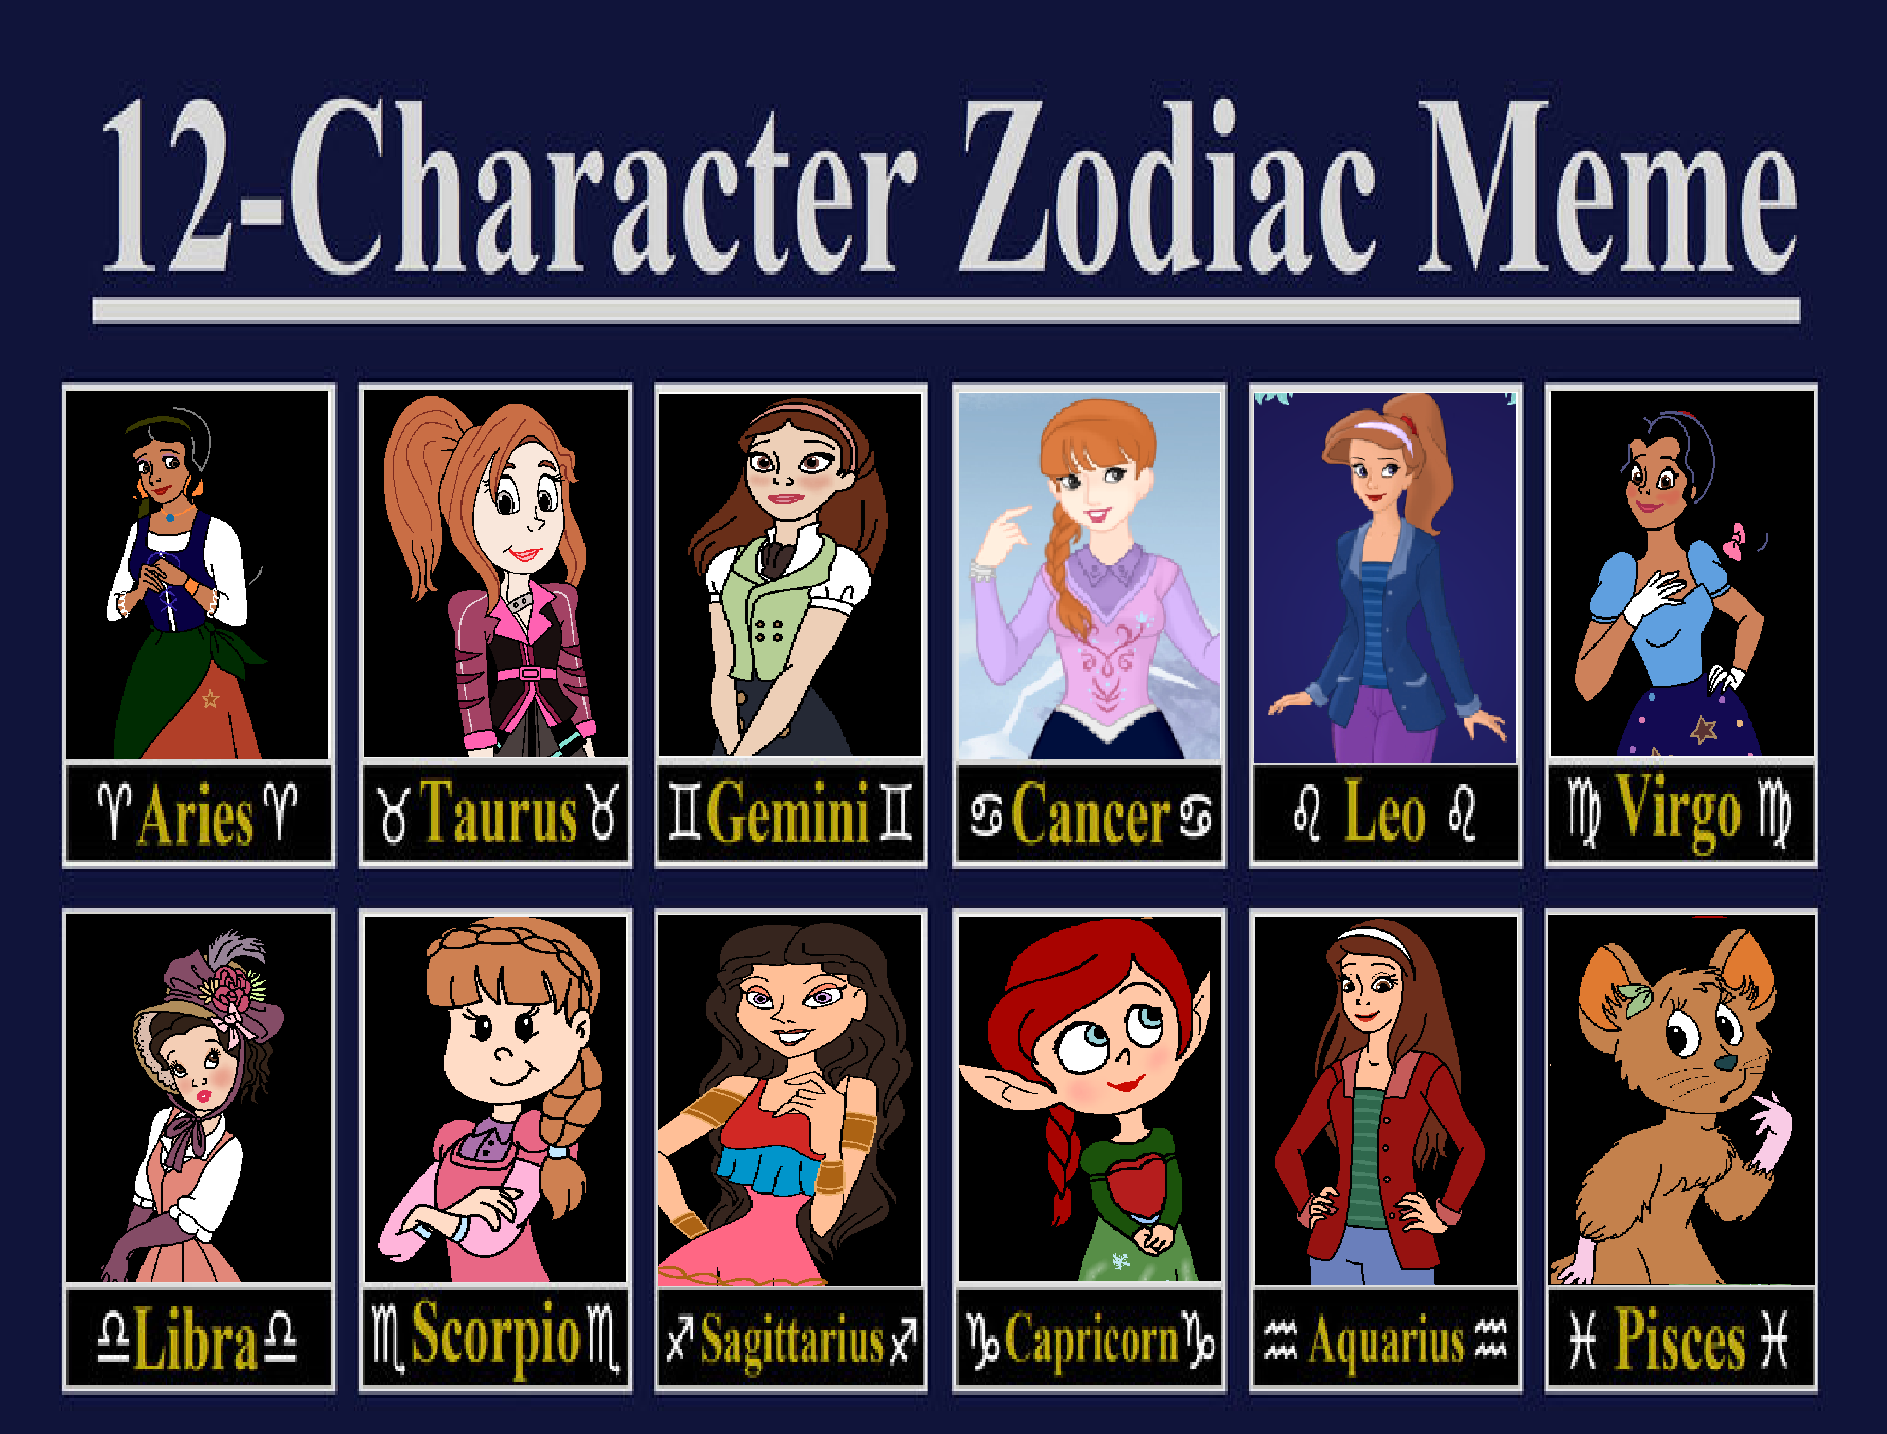 My Disney OCs Zodiac by MorganTheFandomGirl on DeviantArt